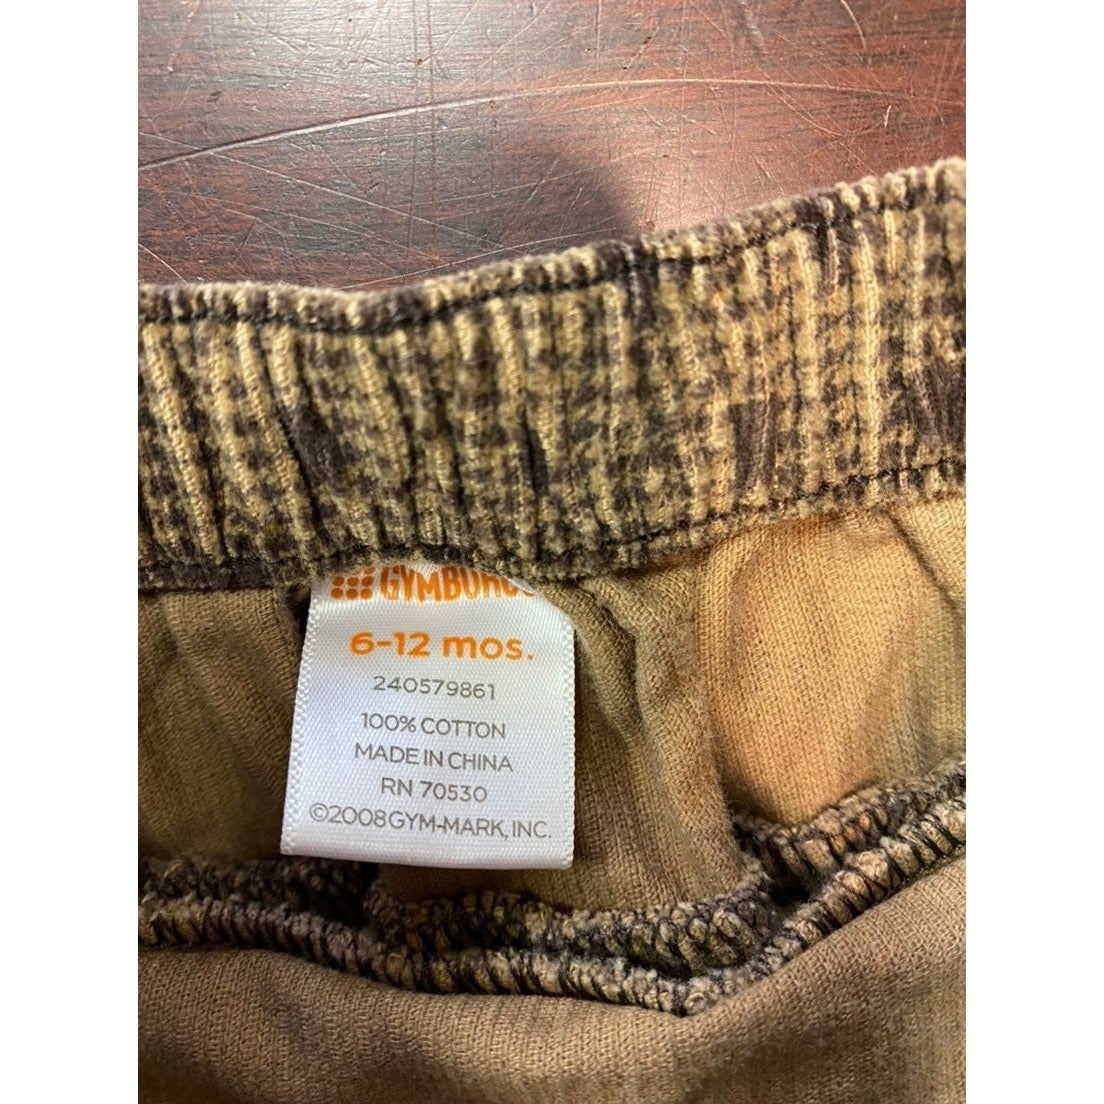 6-12 months vintage Gymboree skirt